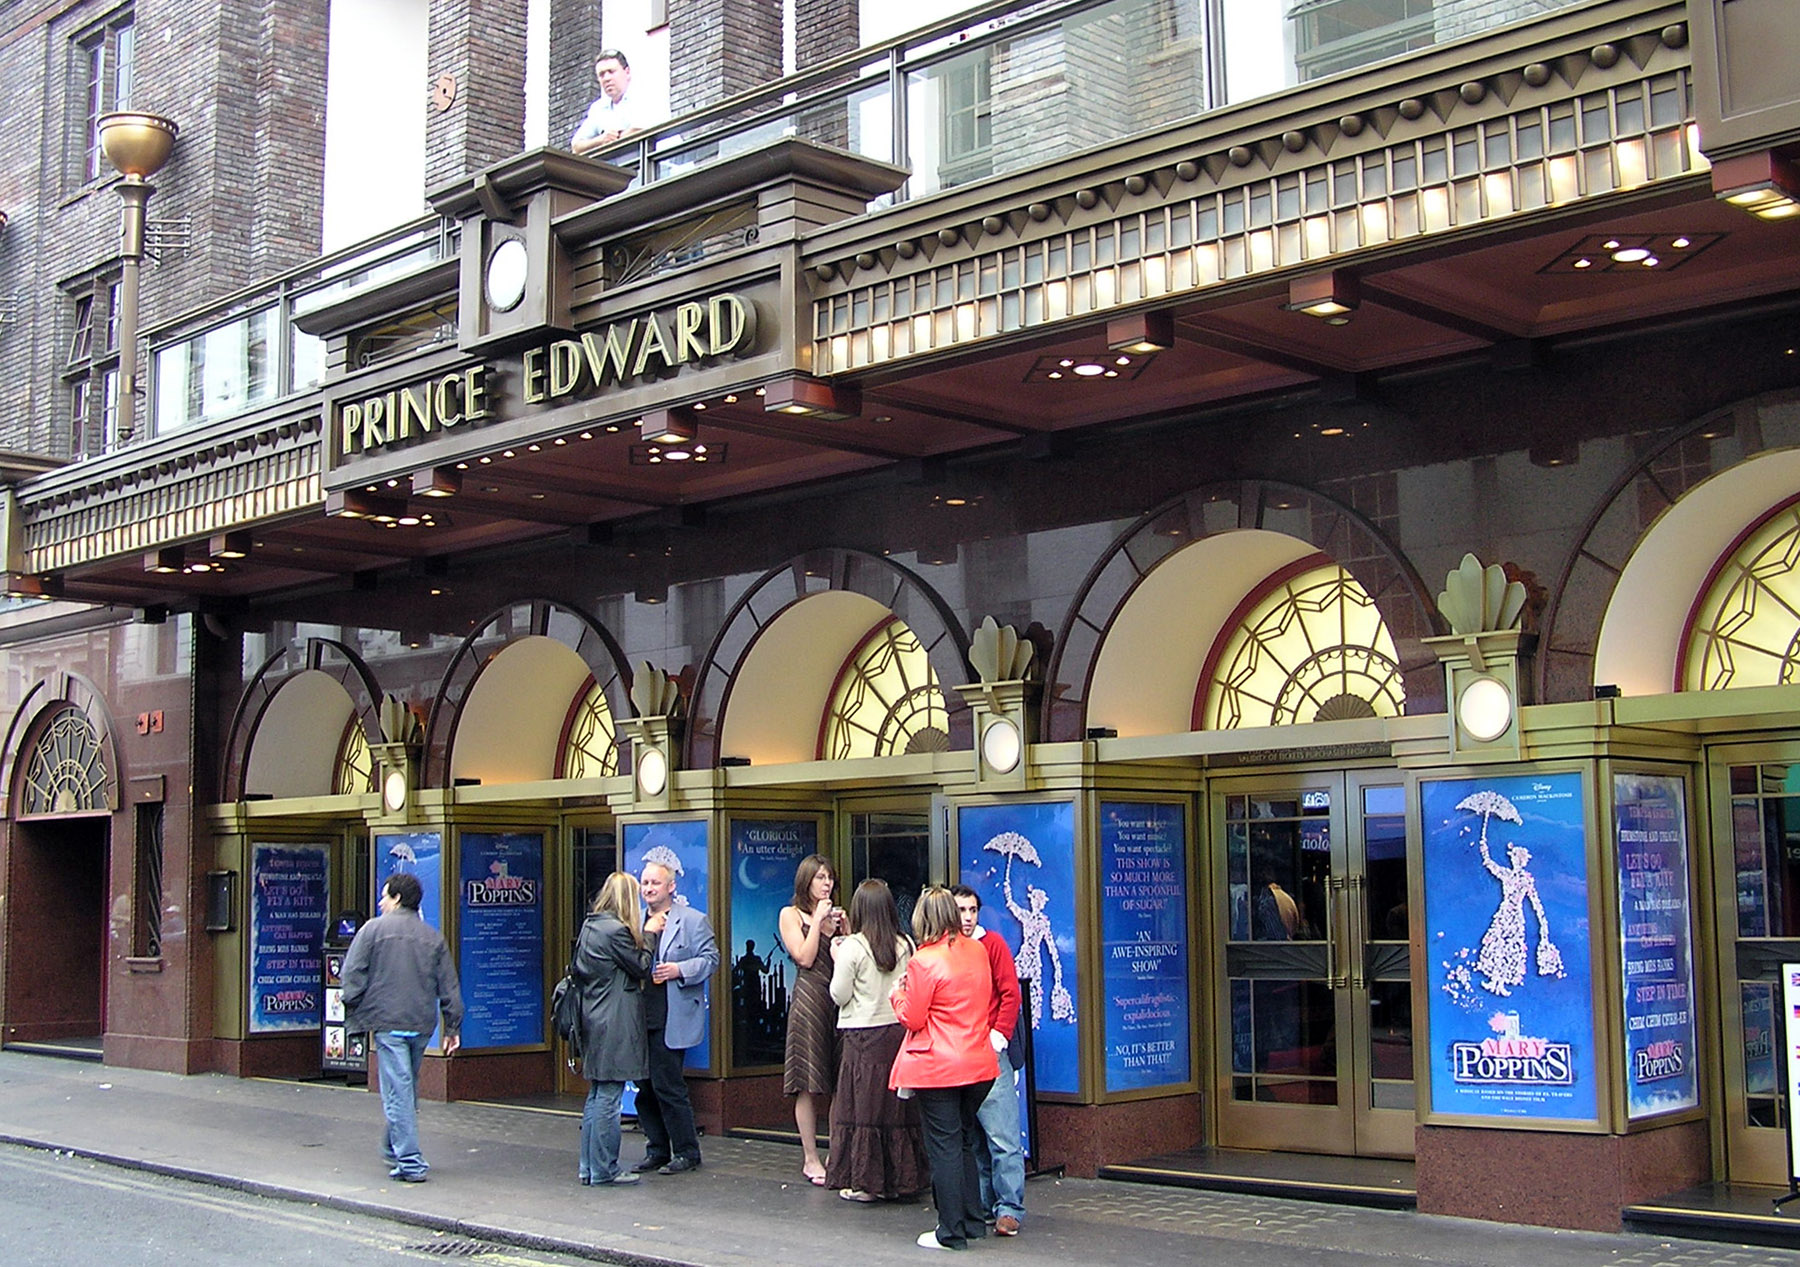 Prince Edward Theatre | London Theatre: Stagedoor